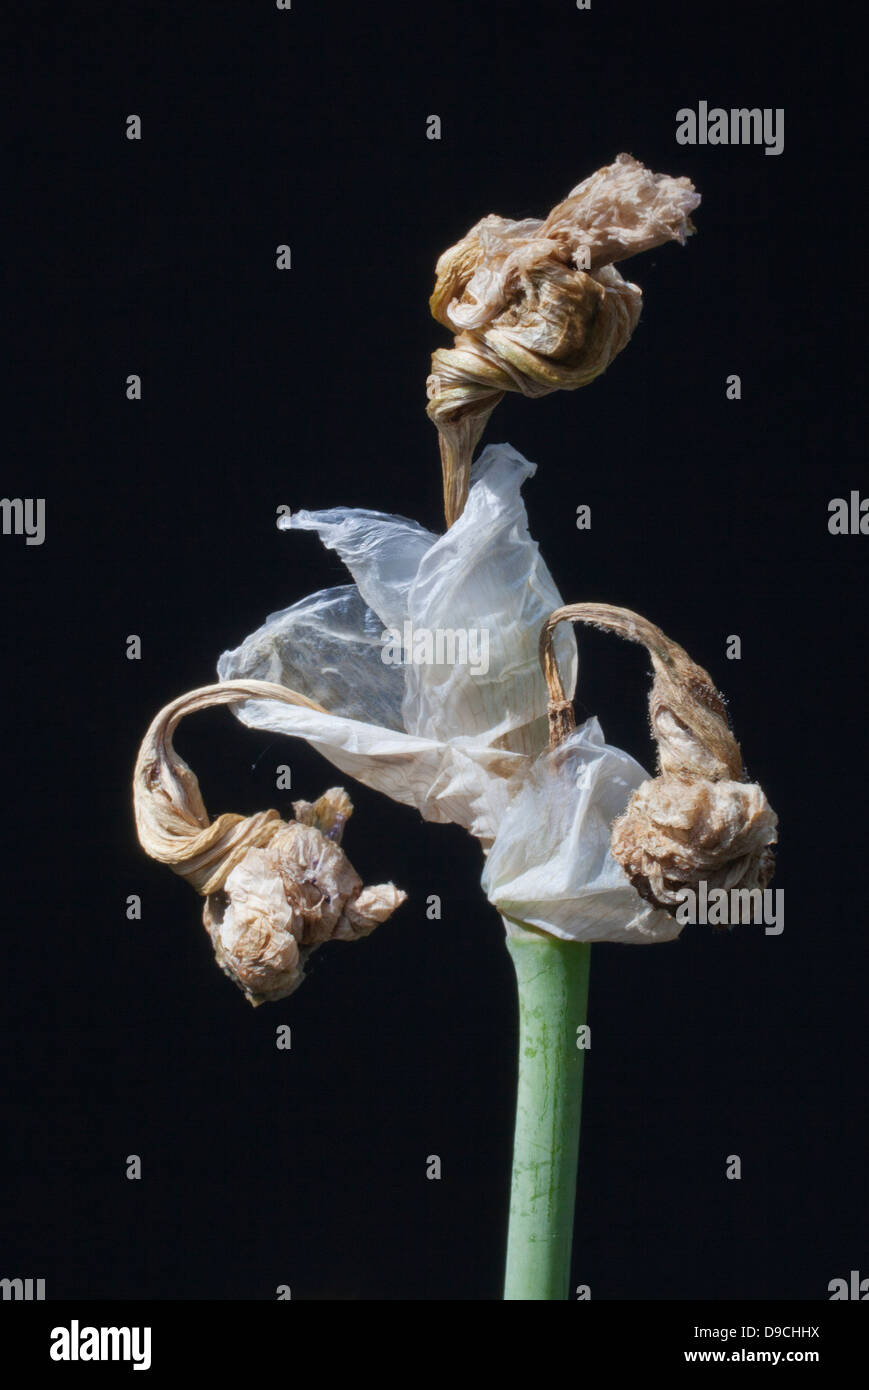 A dead wilting Iris flower Stock Photo